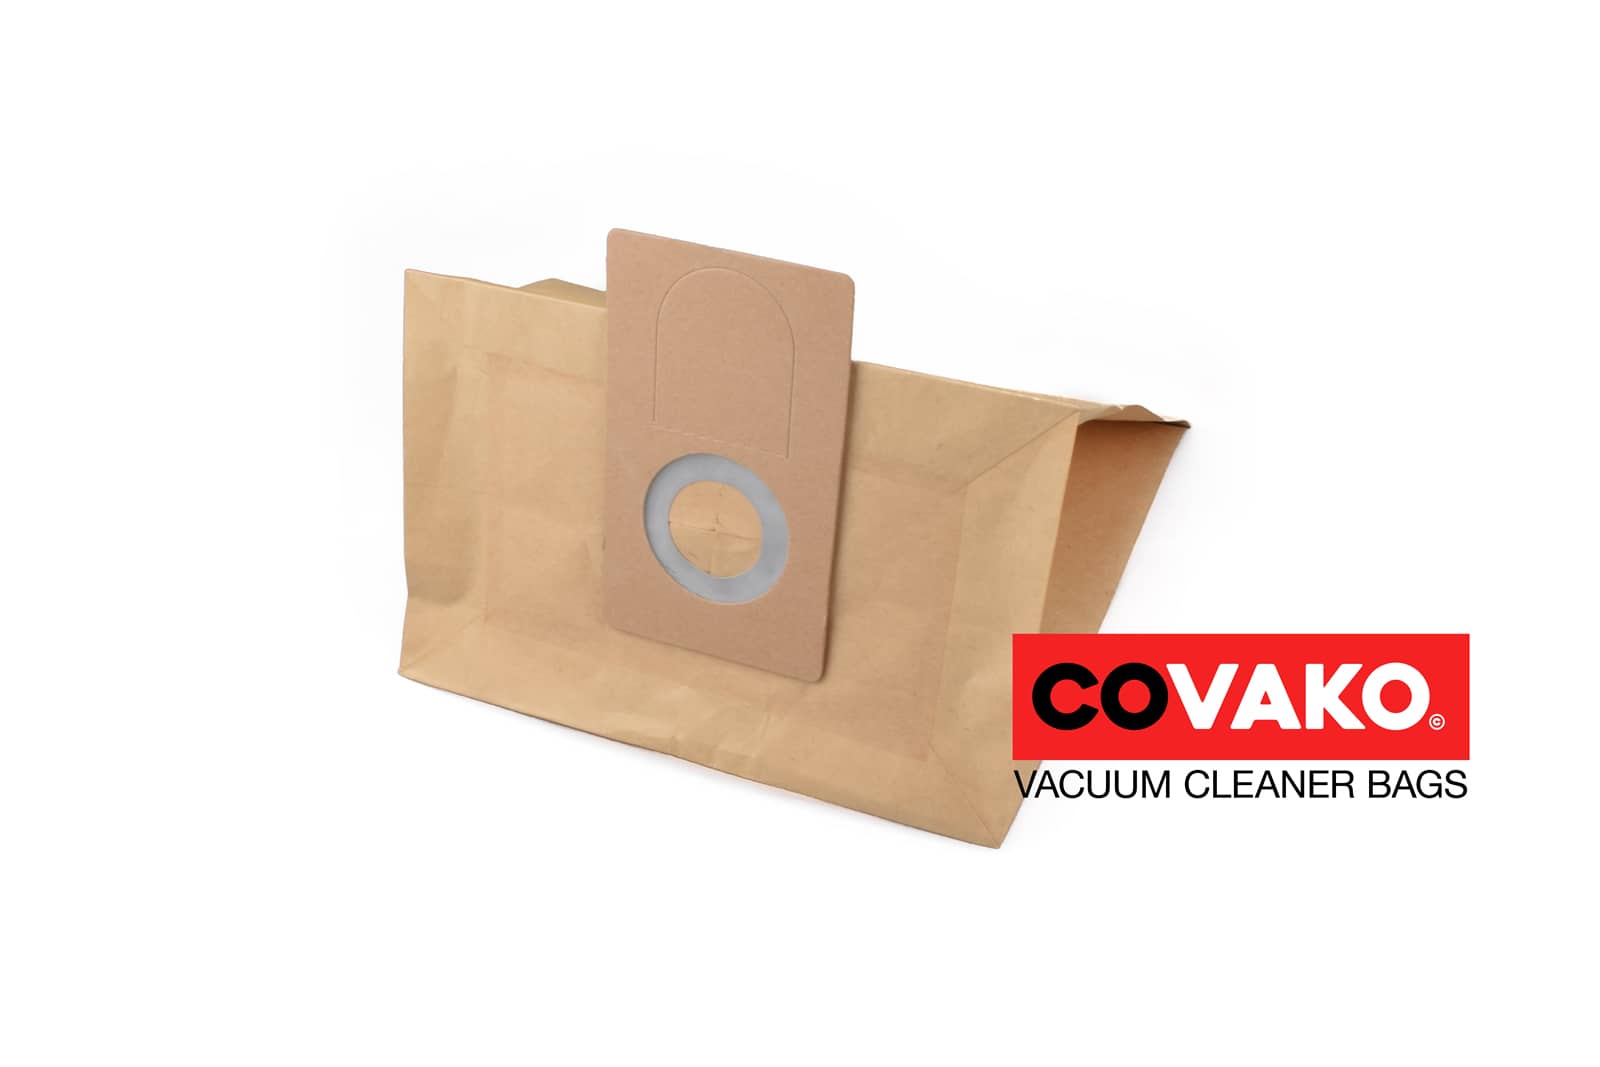 Clean a la Card S11 / Paper - Clean a la Card vacuum cleaner bags